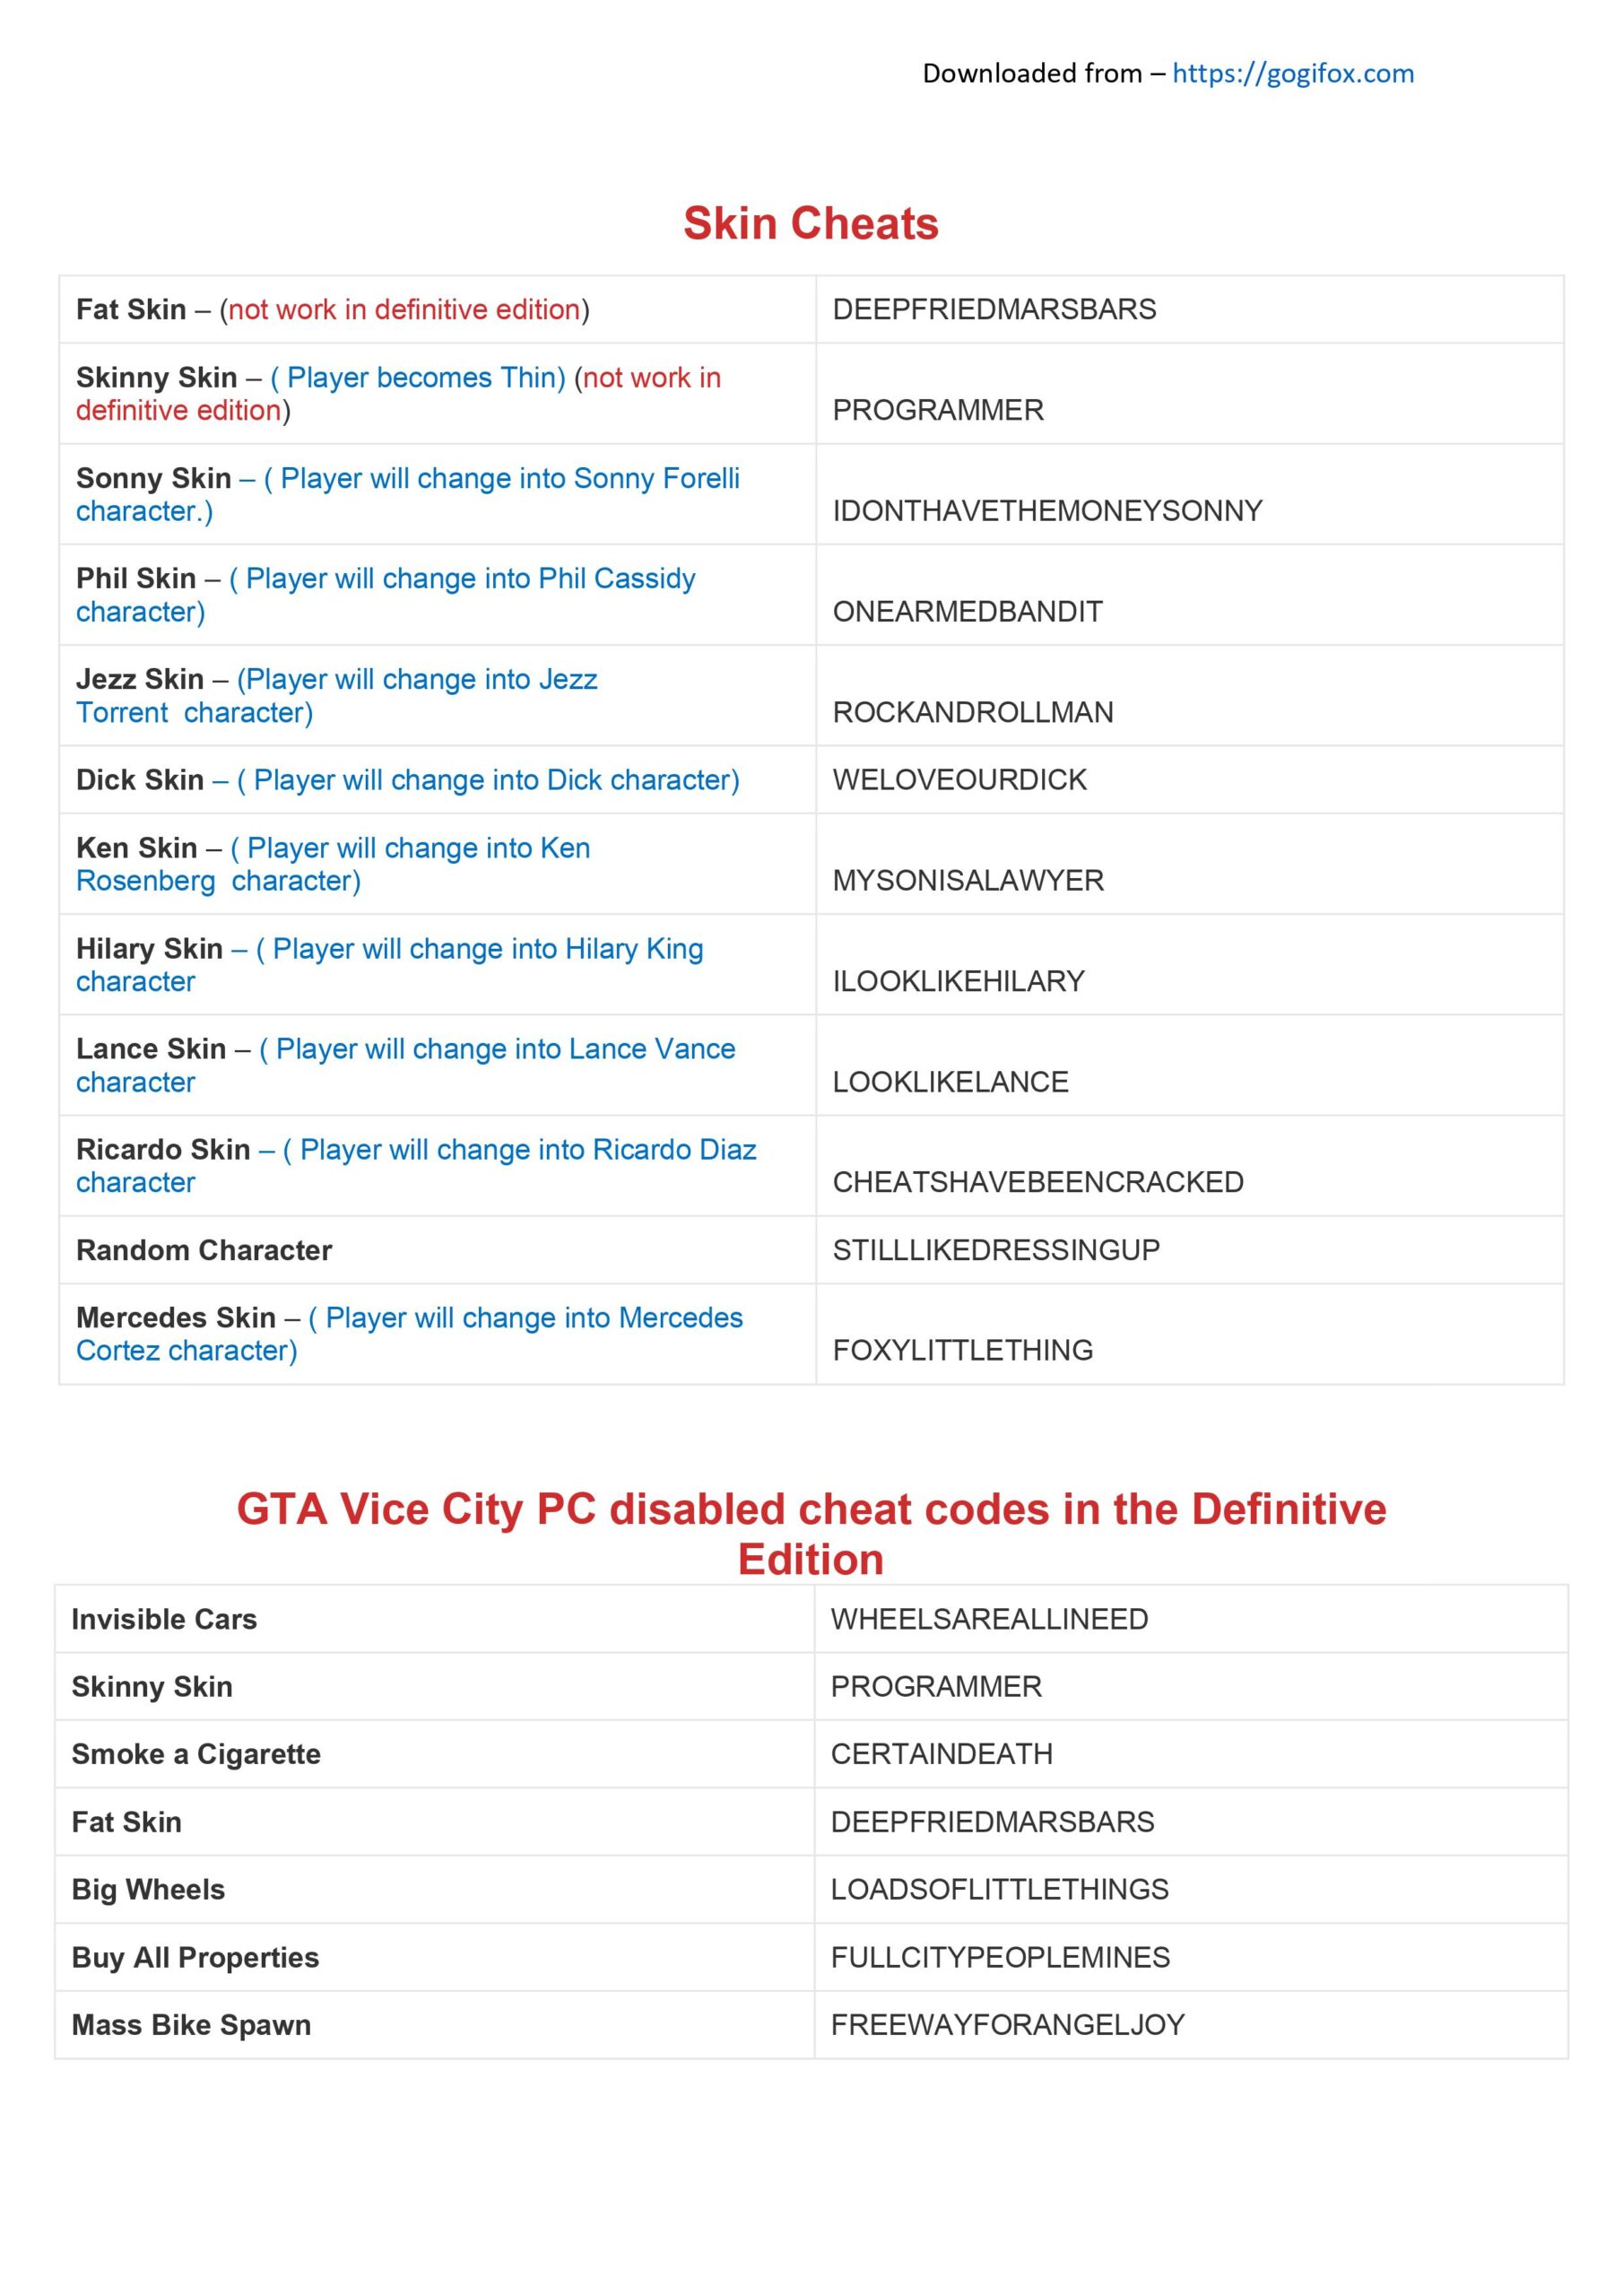 GTA Vice City PC Cheat codes PDF - Page 4